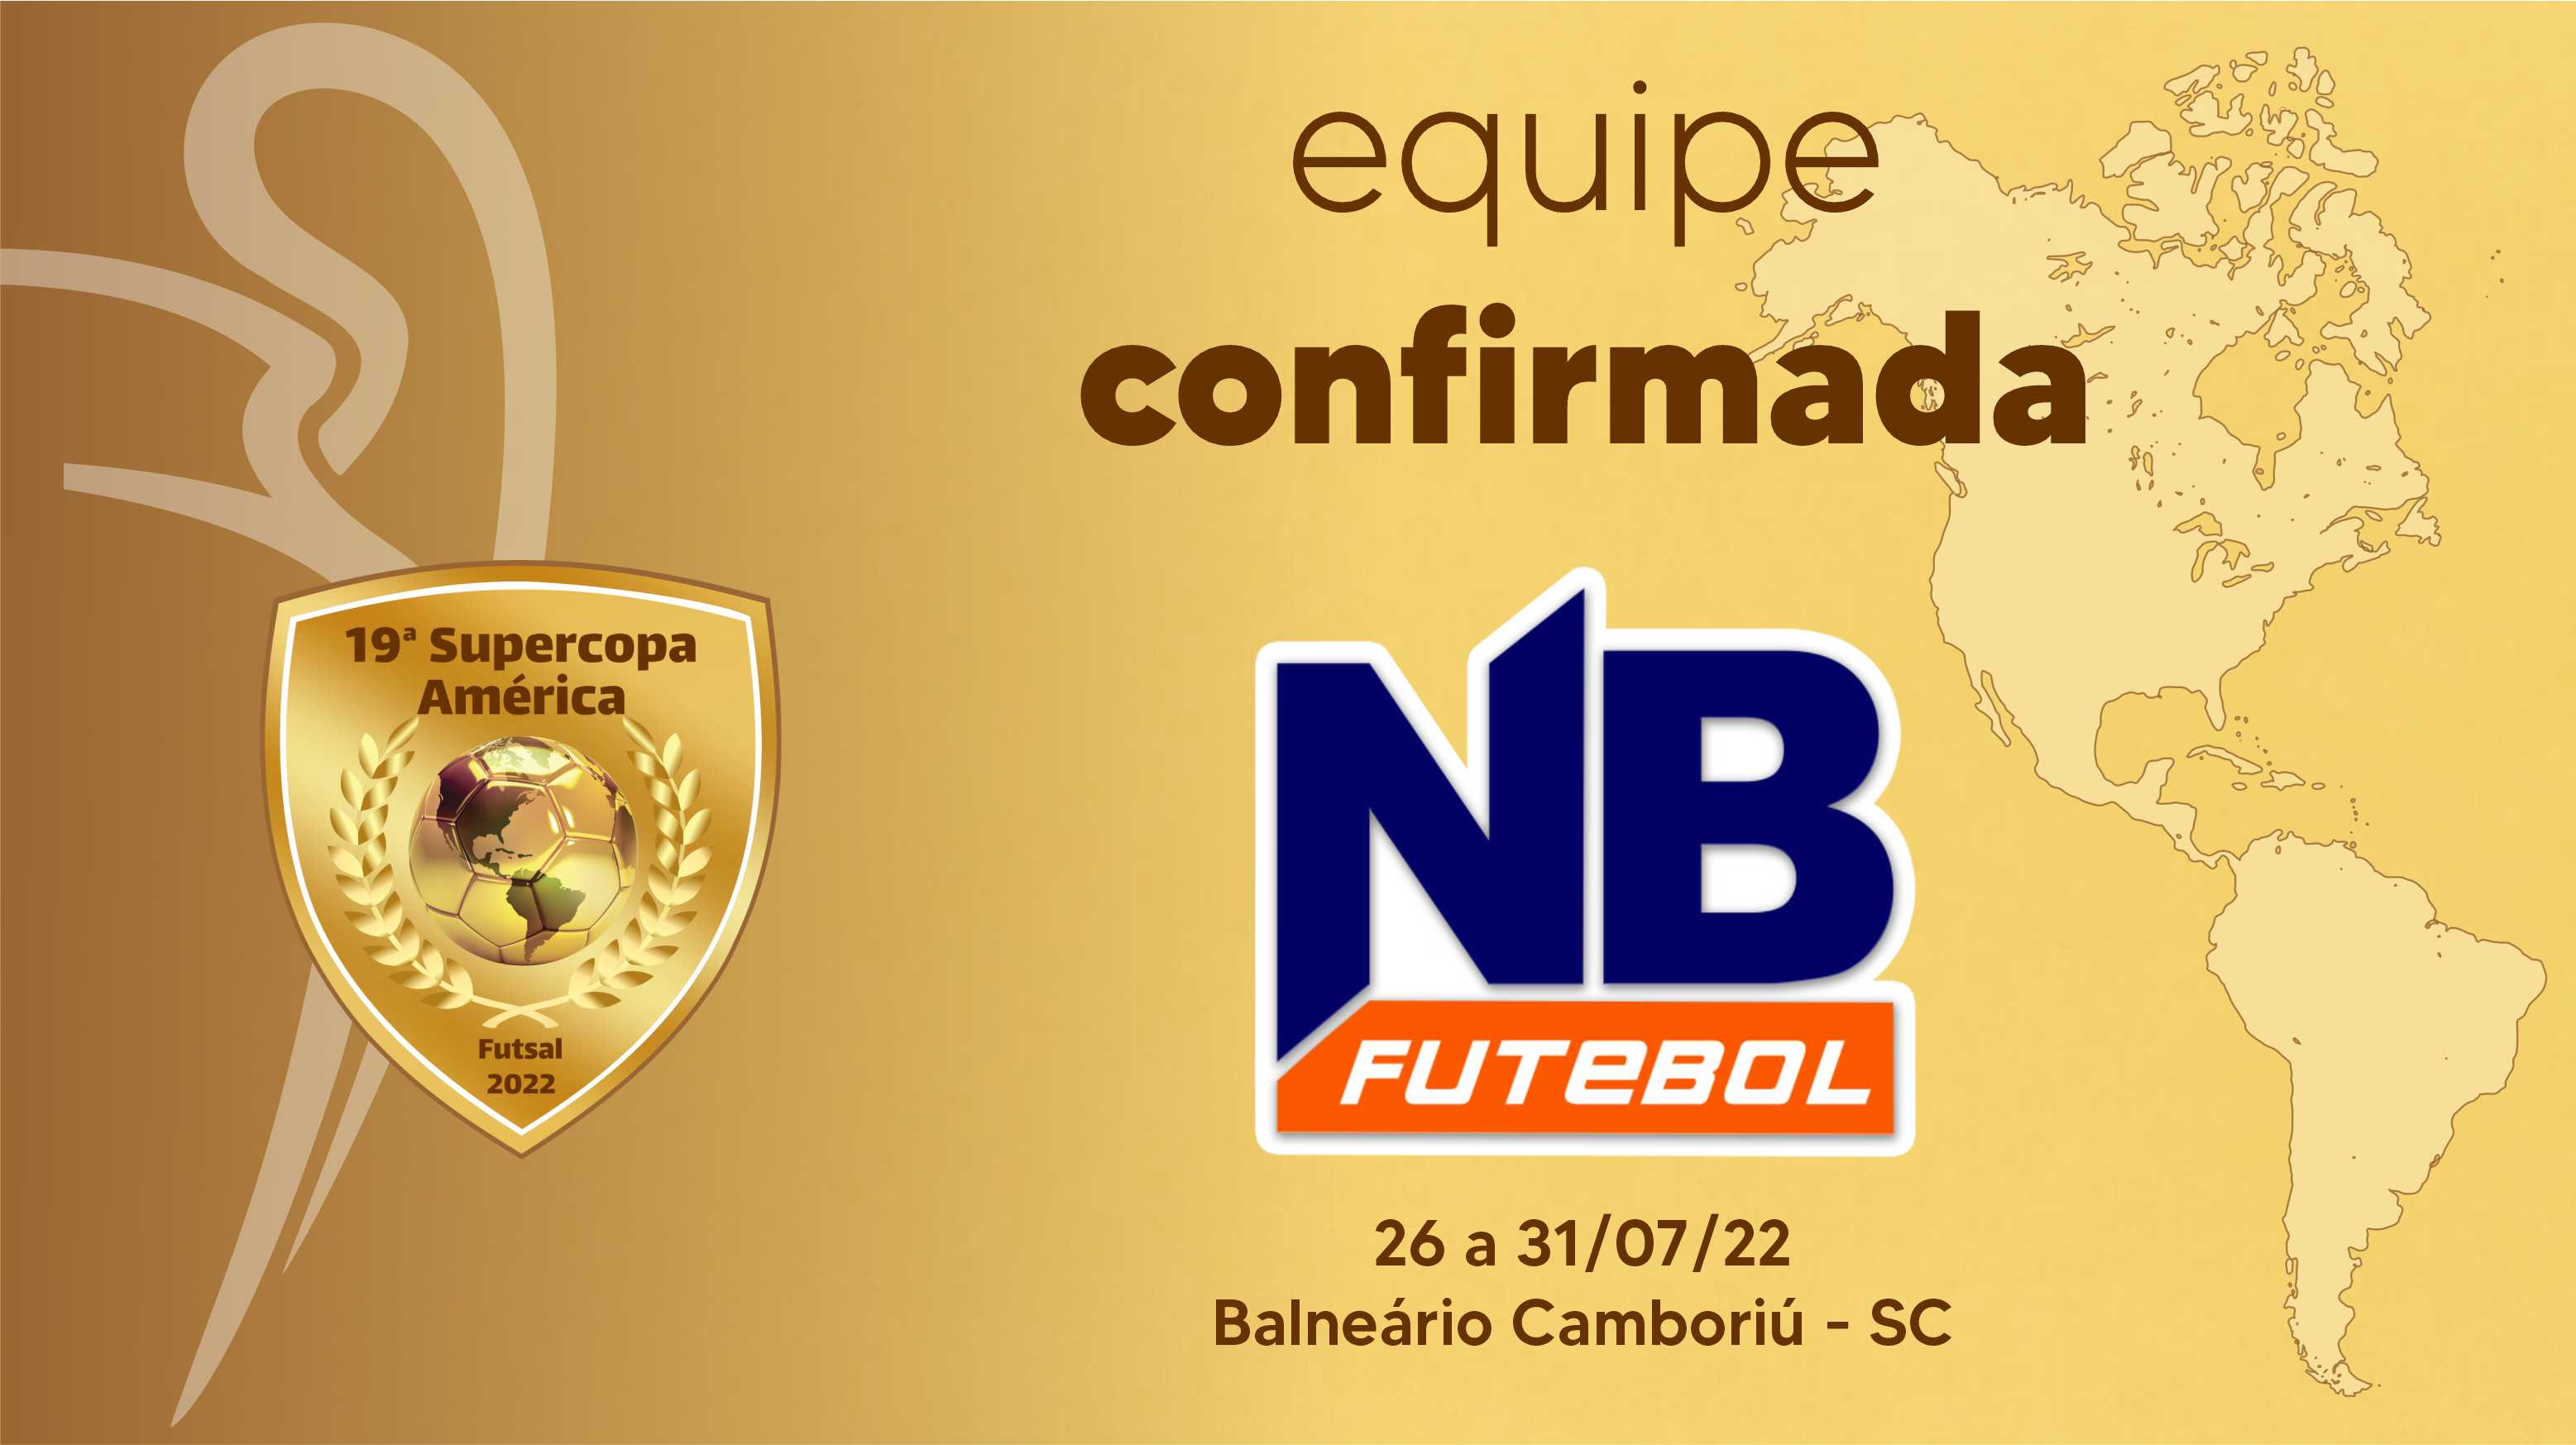 NB Futebol representa Curitiba na Supercopa, em julho